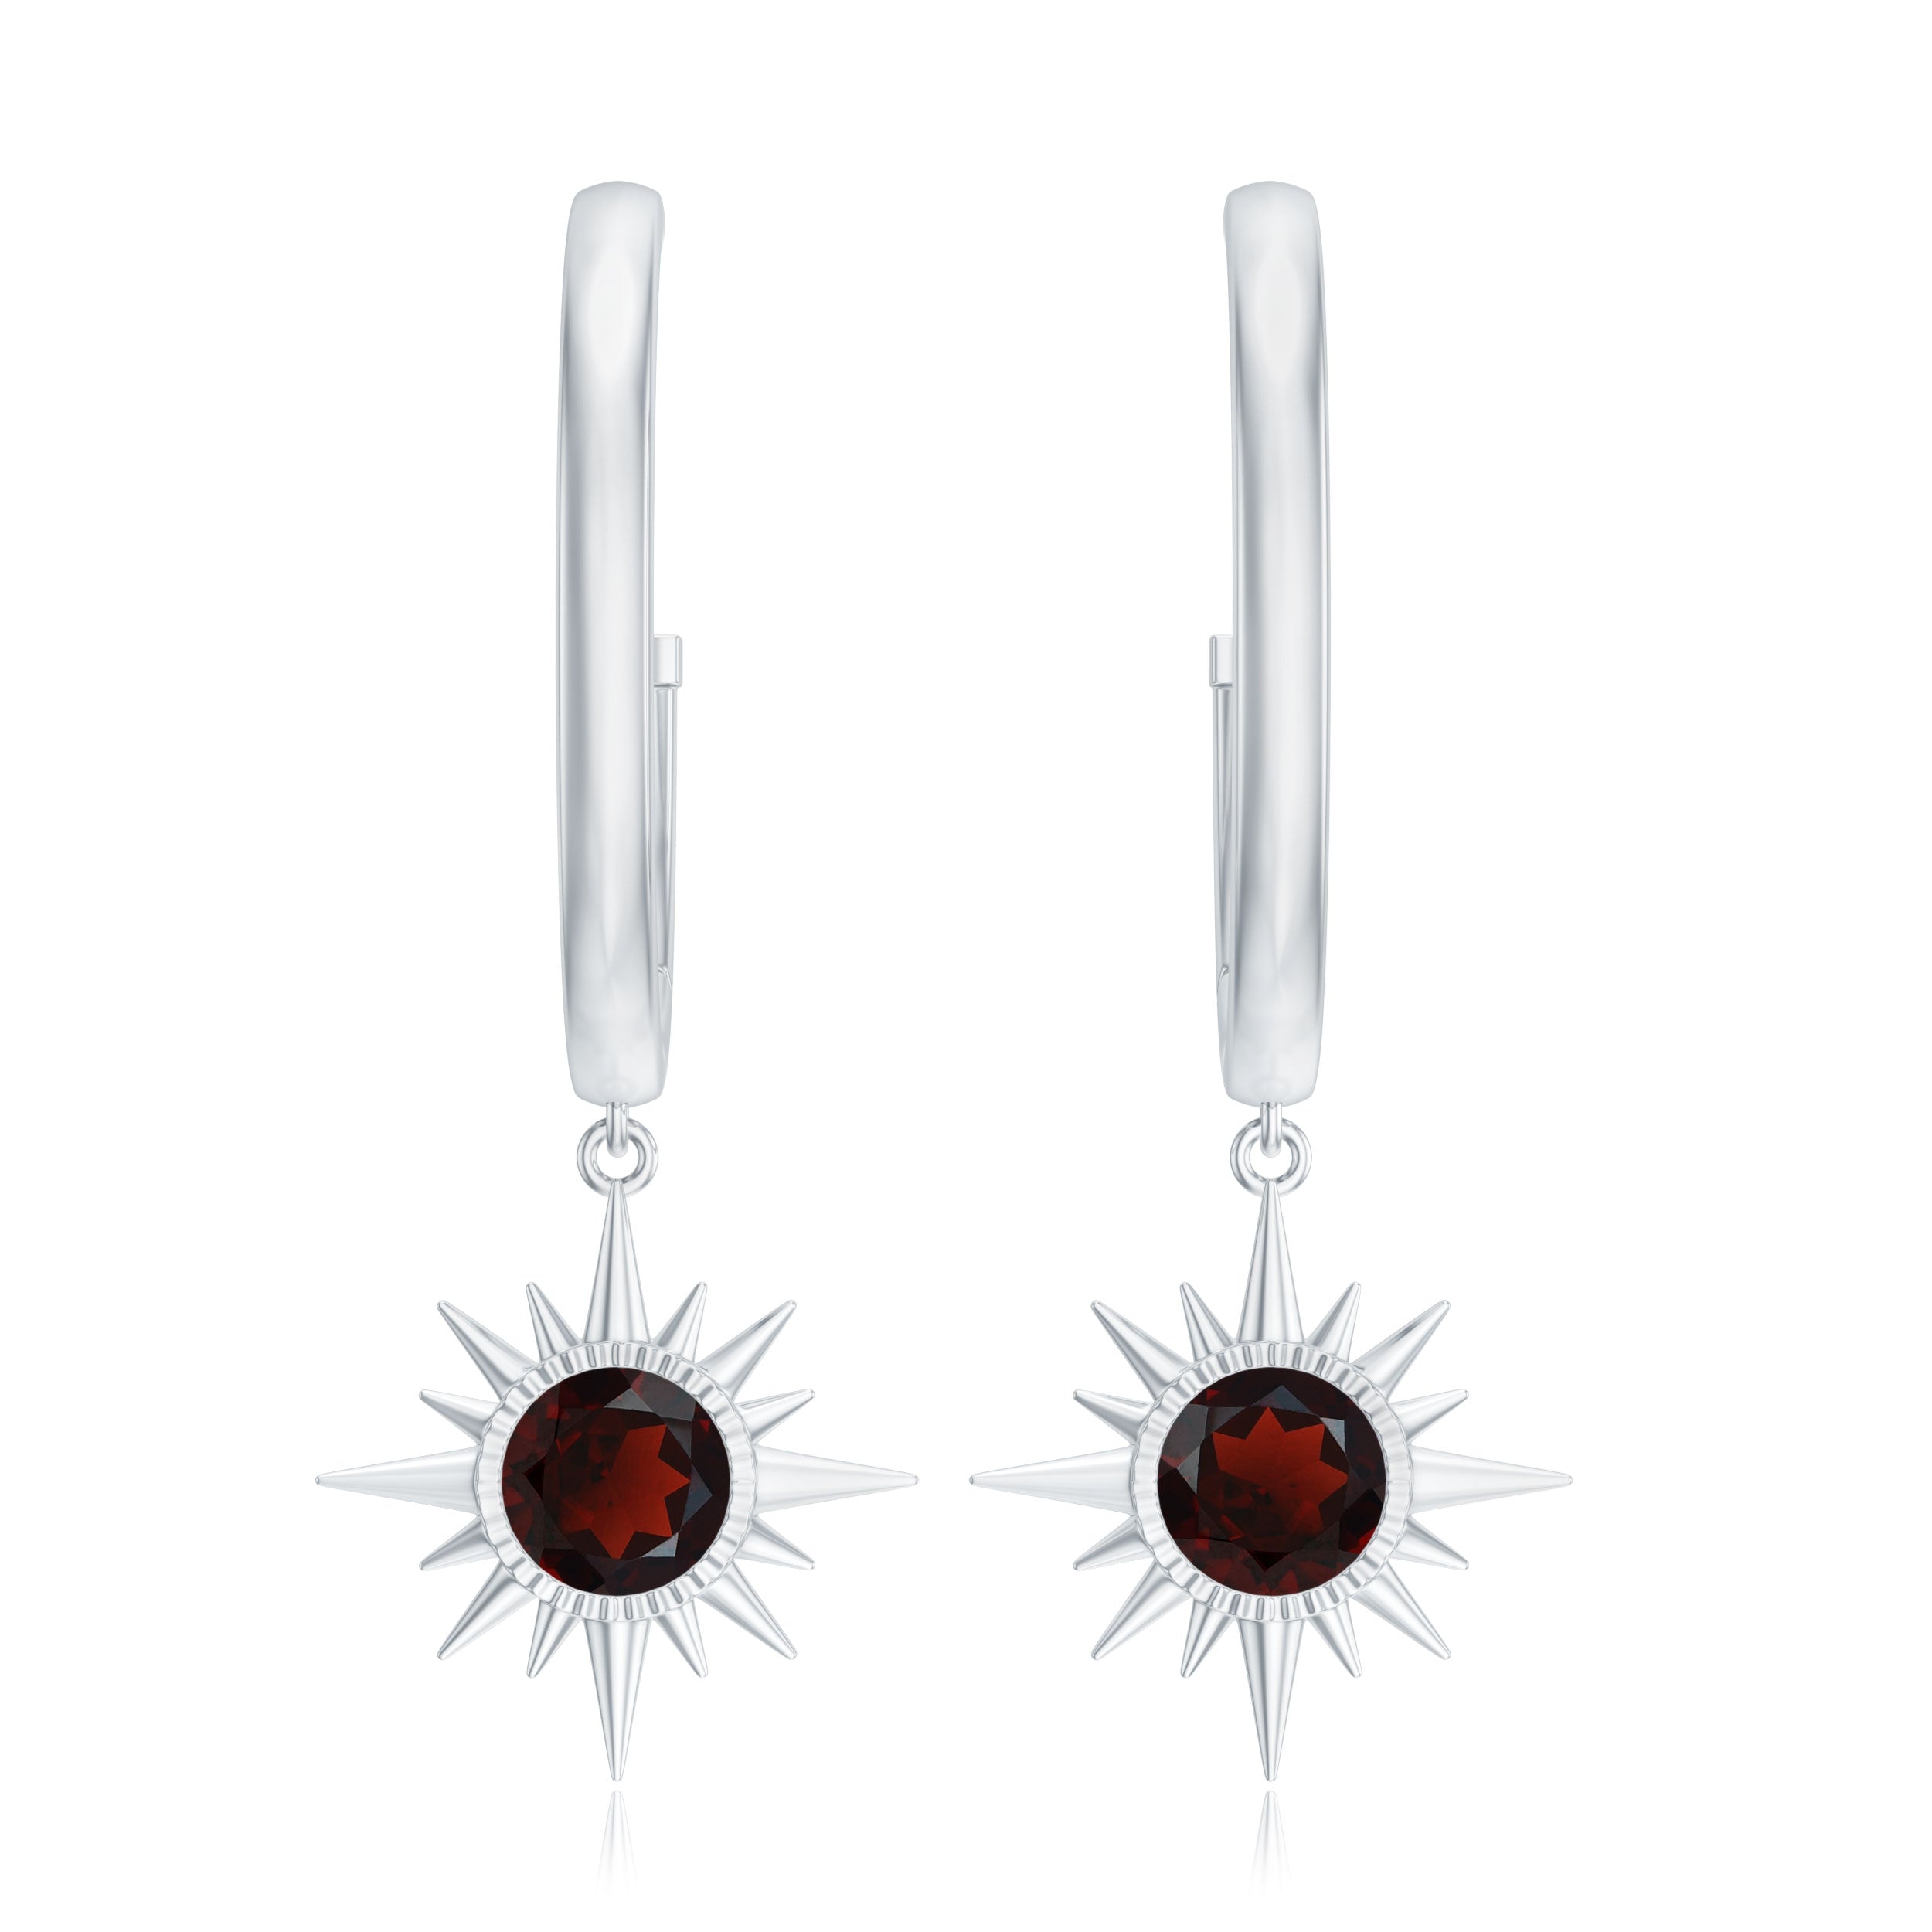 3/4 CT Milgrain Bezel Set Garnet Sunburst Drop Hoop Earrings Garnet - ( AAA ) - Quality - Rosec Jewels